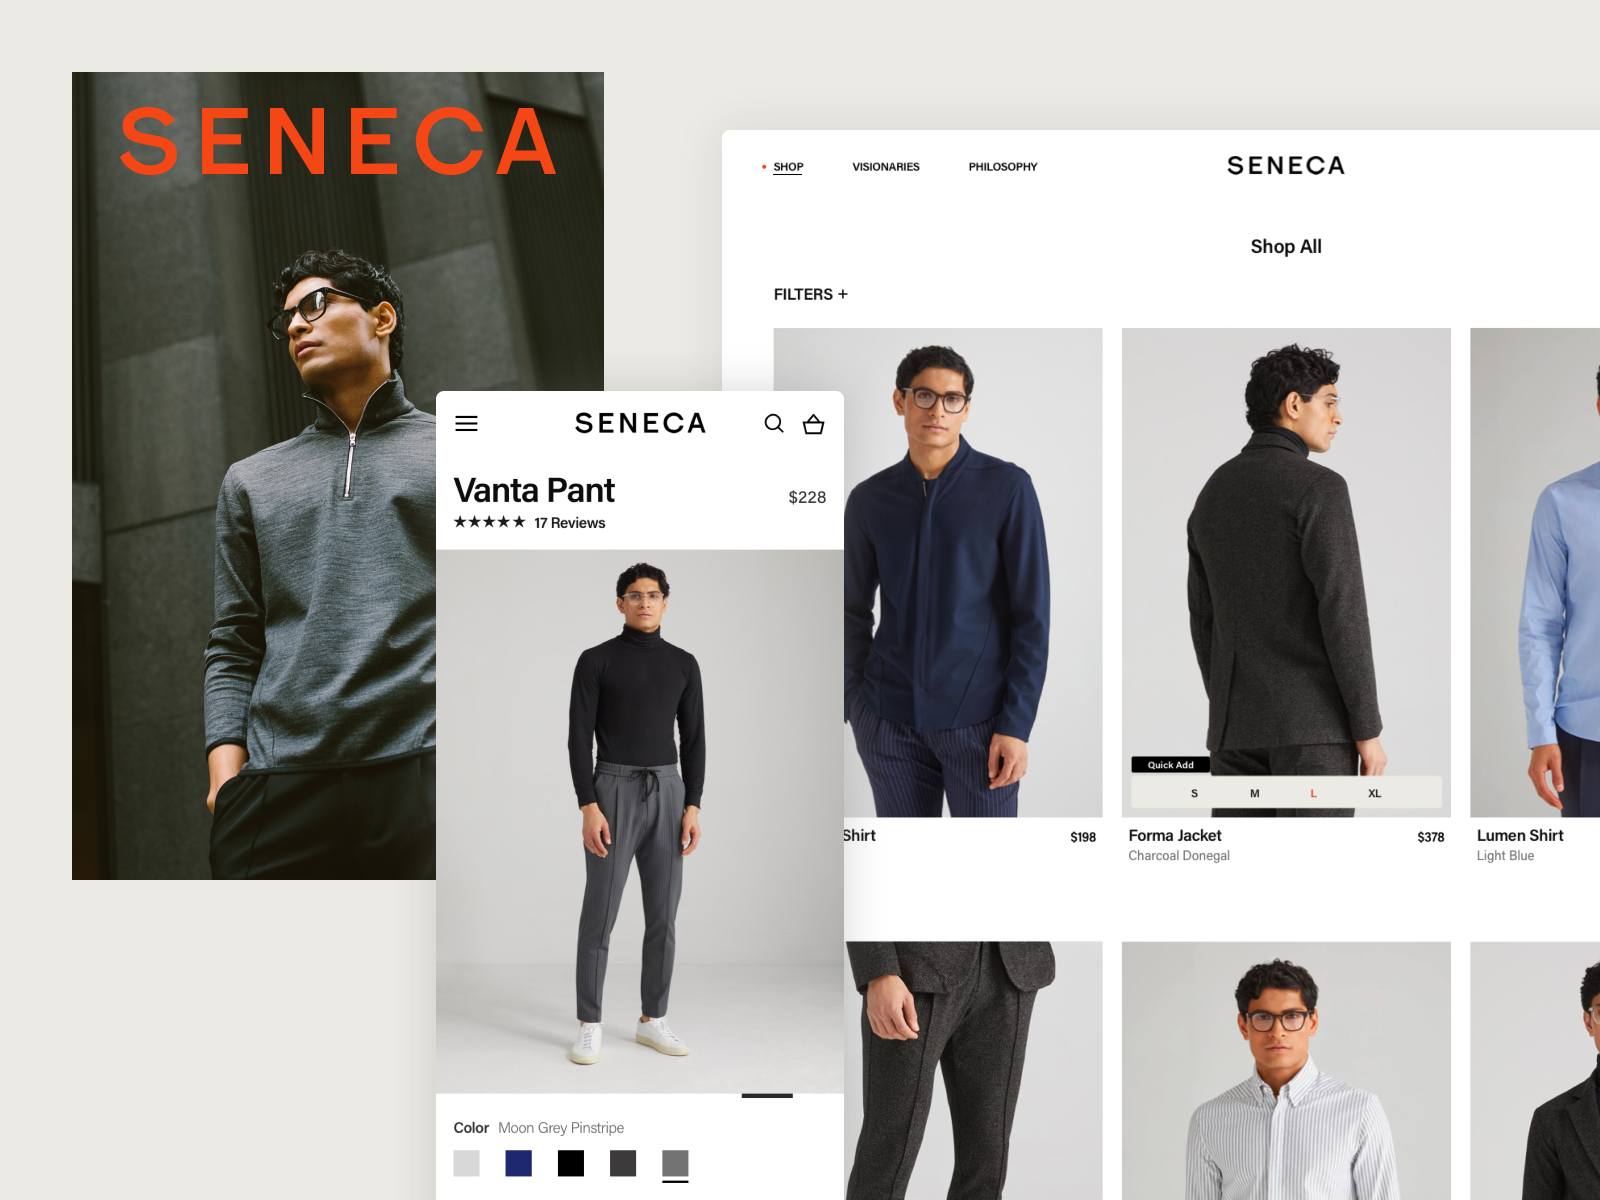 SENECA: Product list